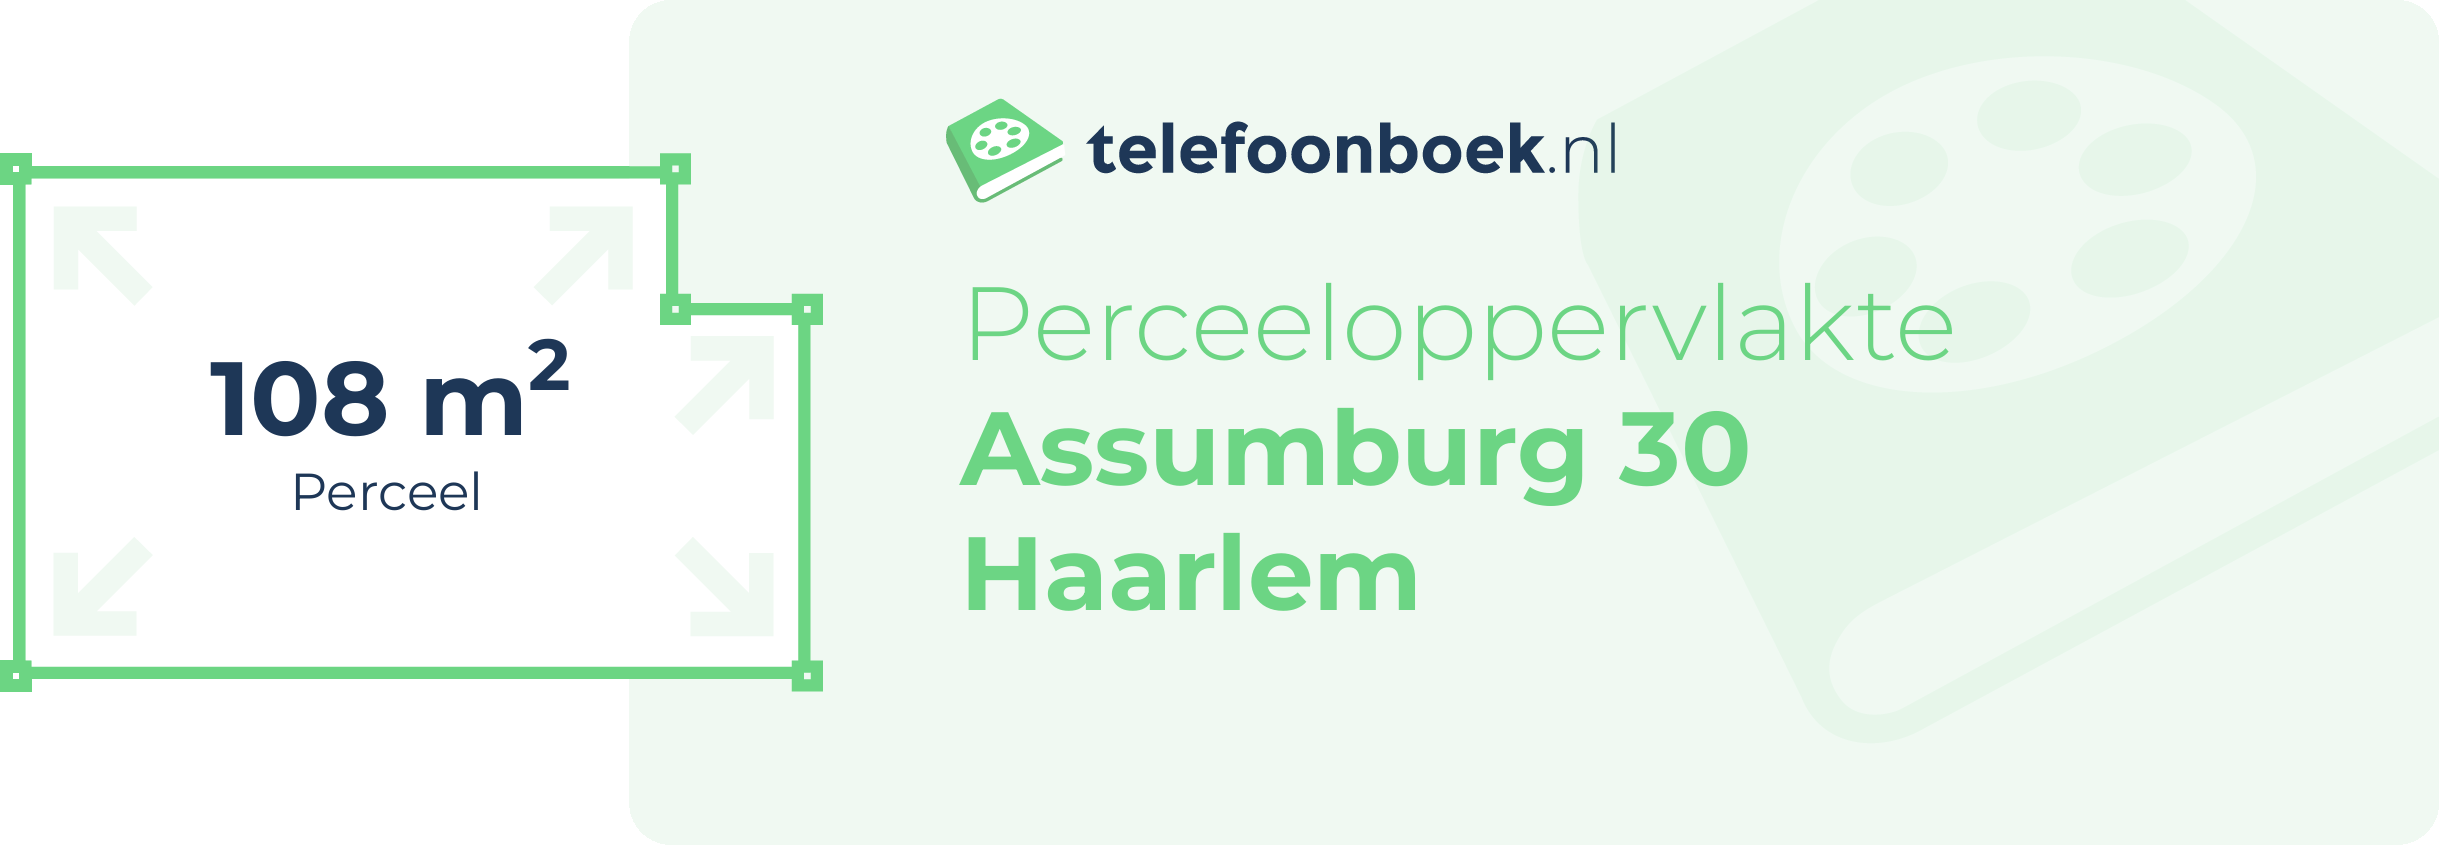 Perceeloppervlakte Assumburg 30 Haarlem